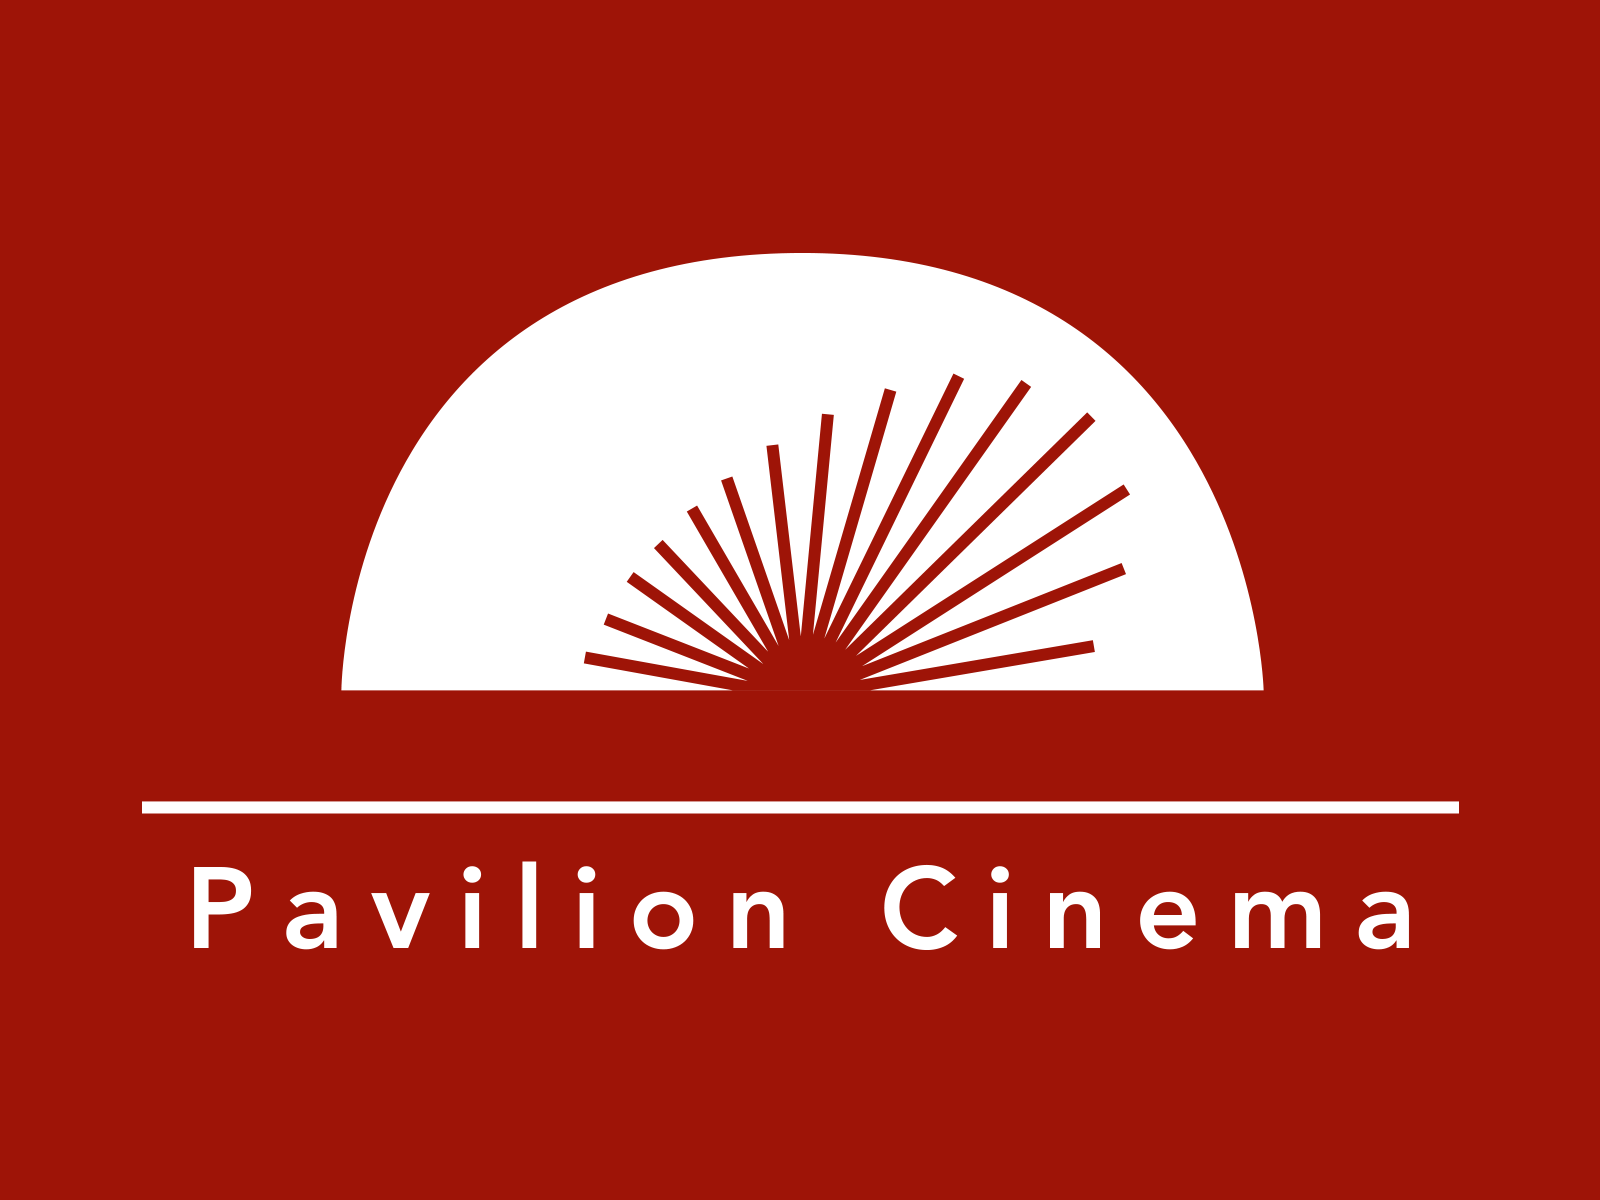 Pavillion cinema